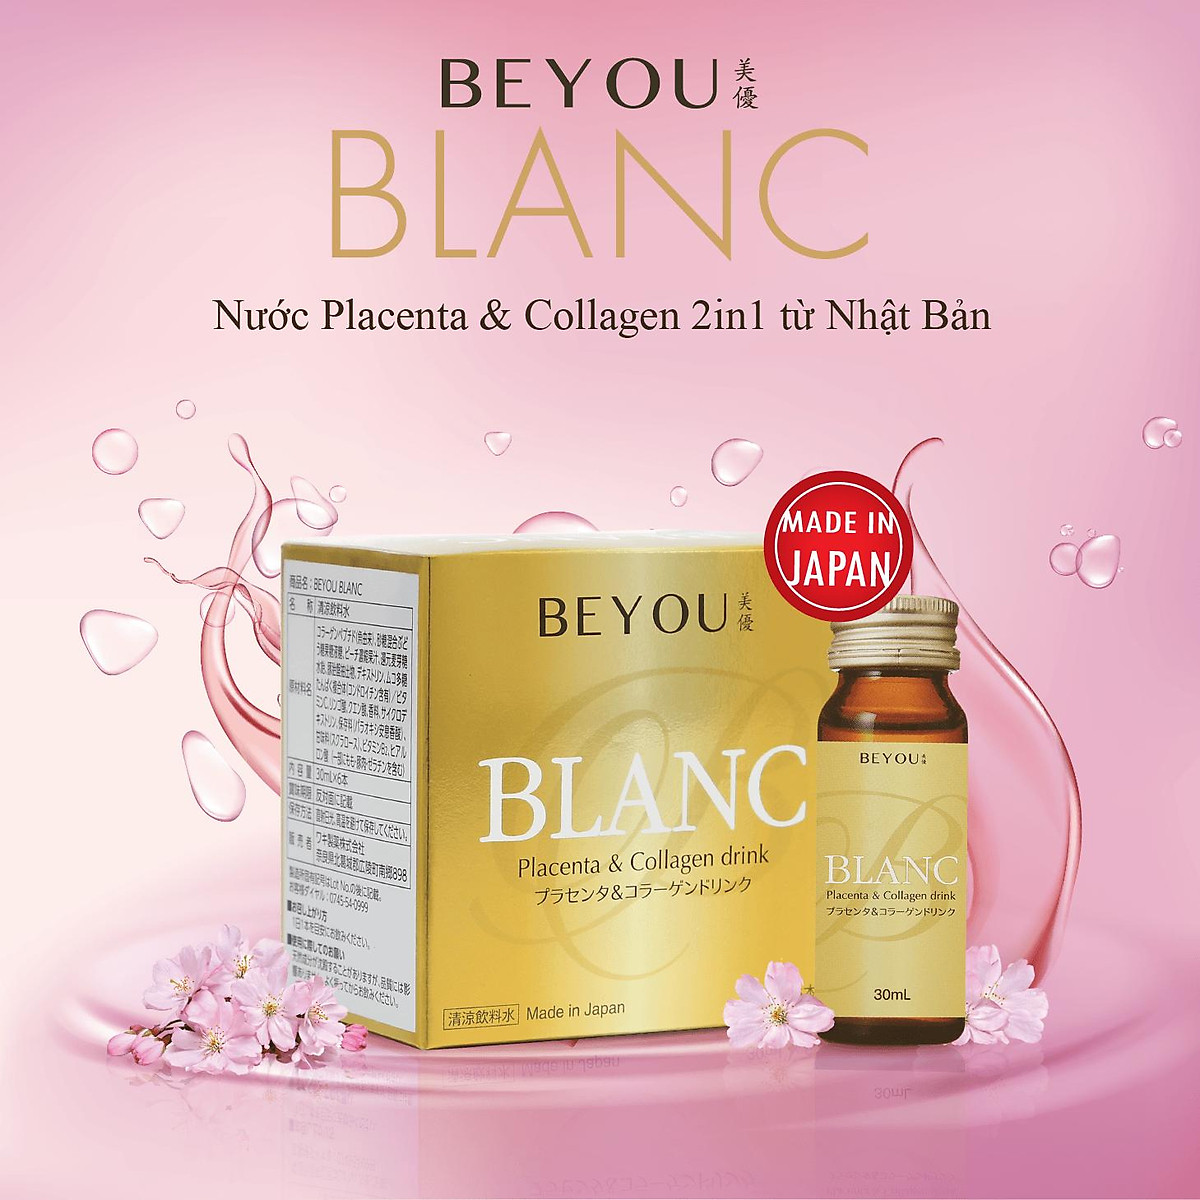 Beyou Blanc - Nước Placenta & Collagen Nhật Bản ảnh 1